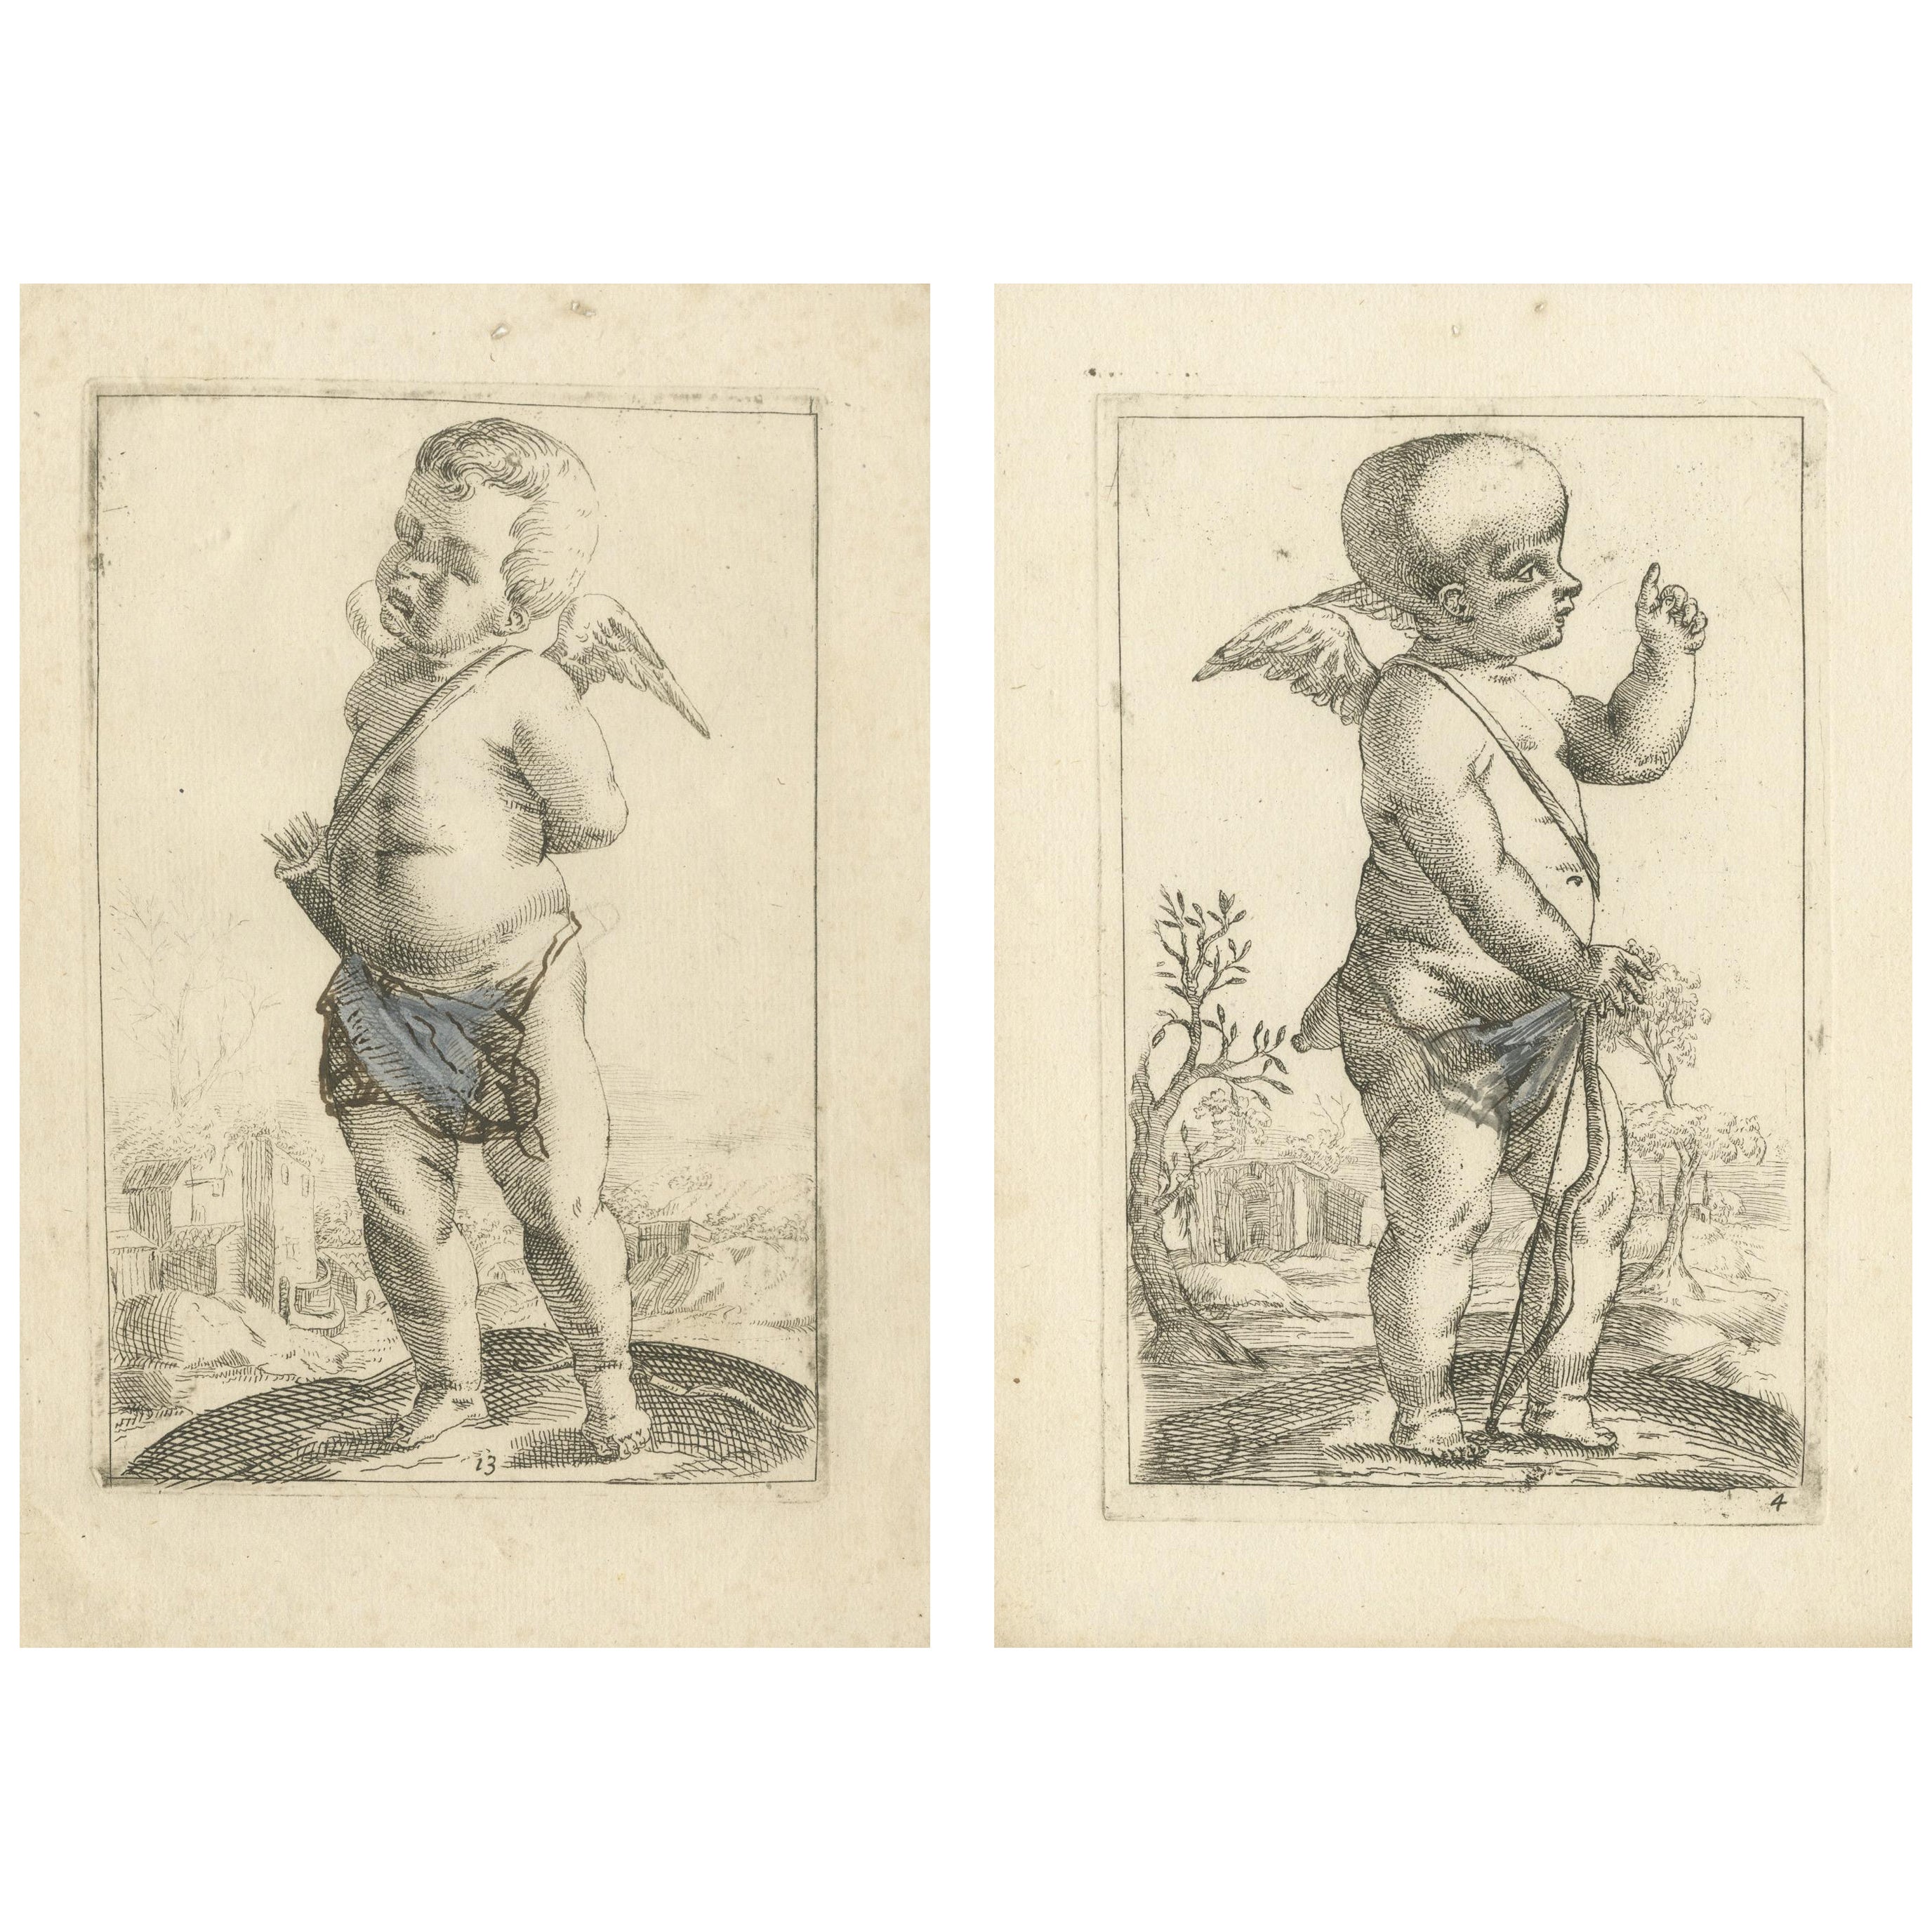 Putti baroque : Sérénade d'innocence et de jeu, vers 1620 en vente